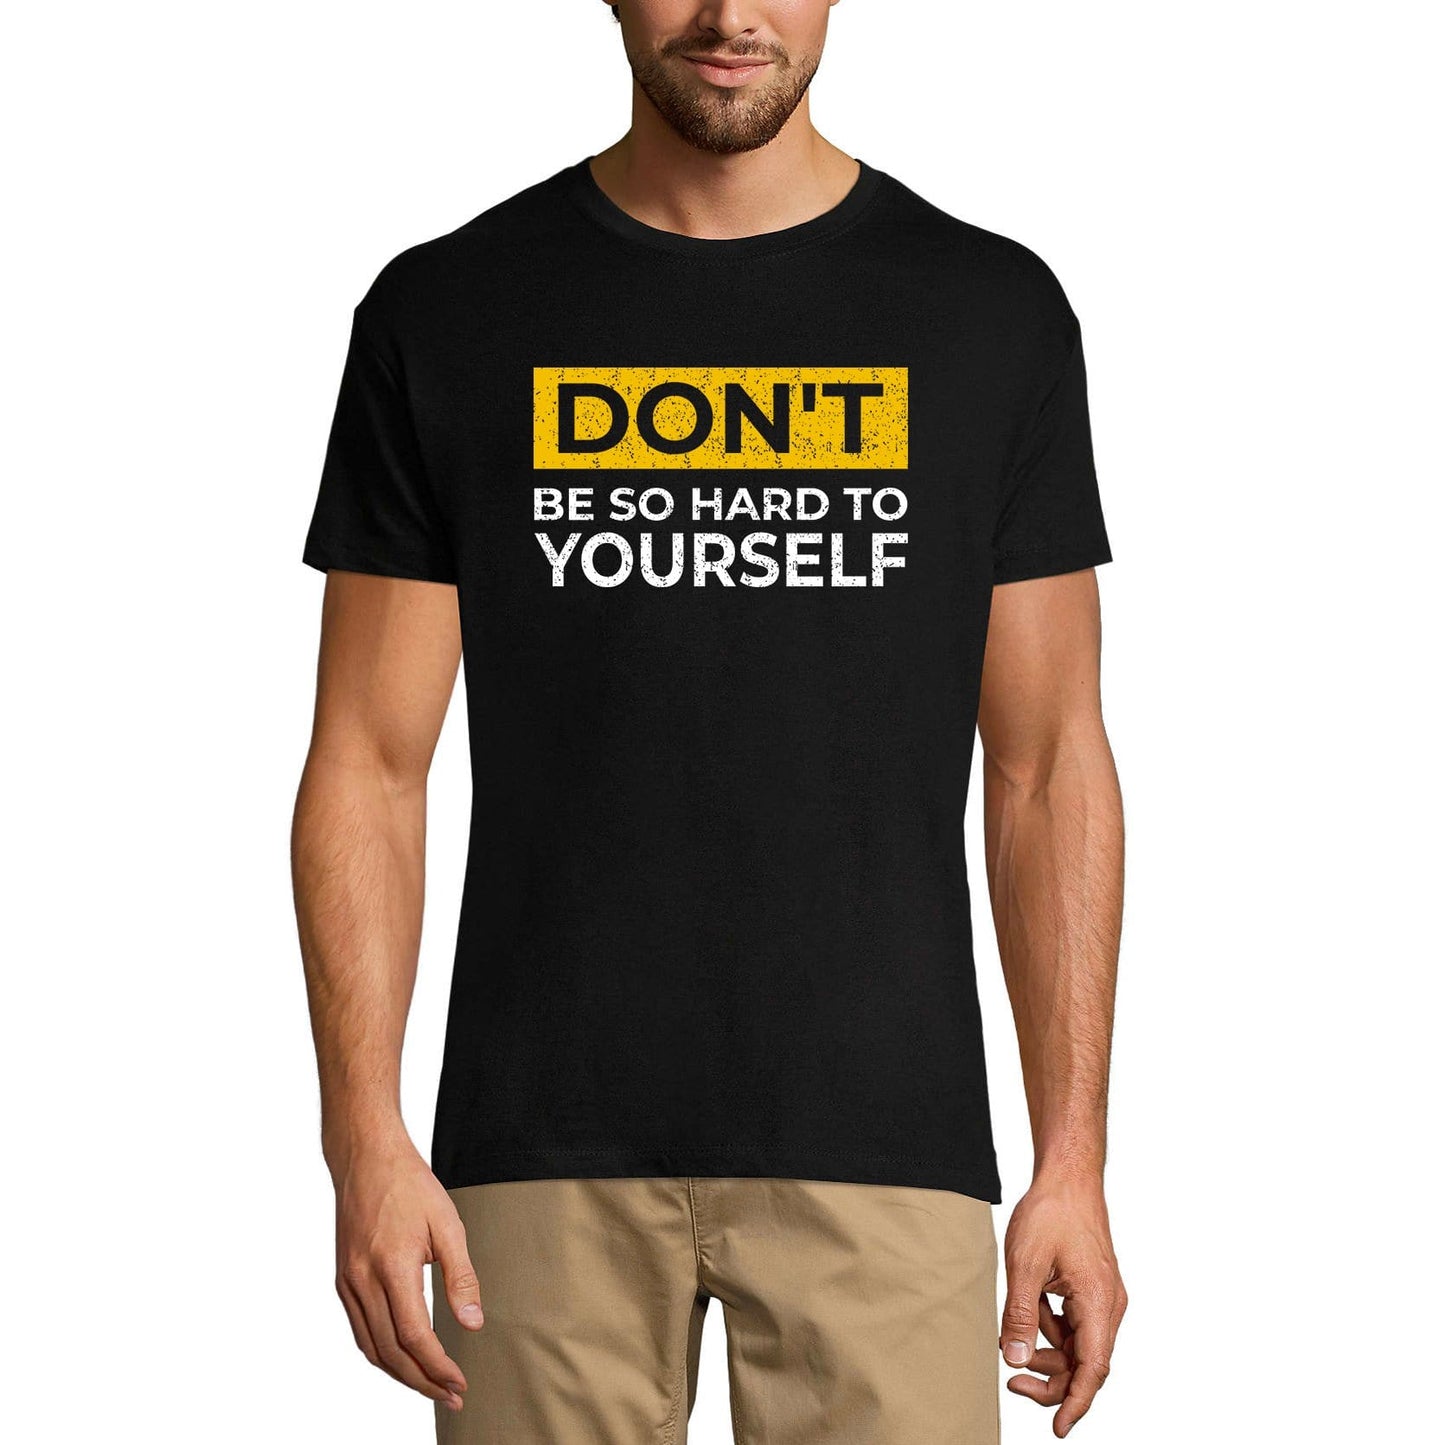 ULTRABASIC Men's T-Shirt Don't Be so Hard to Yourself - Motivational Shirt for Men